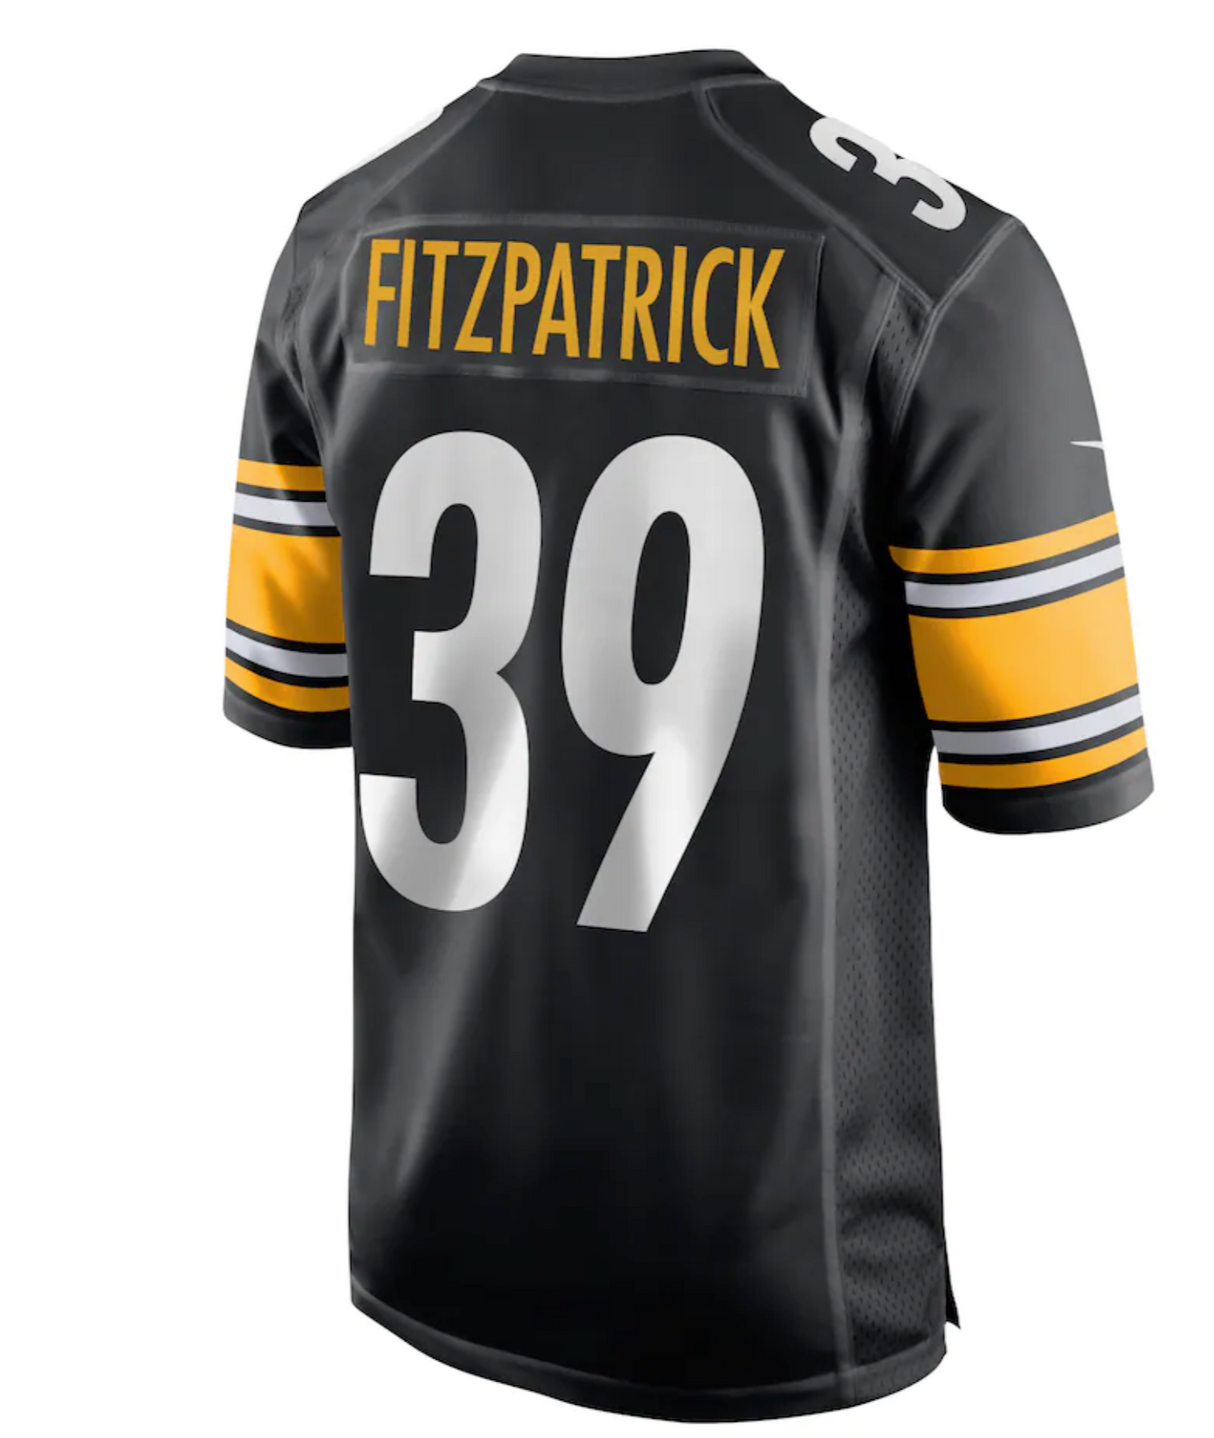 Steelers Fitzpatrick Nike Player Jersey